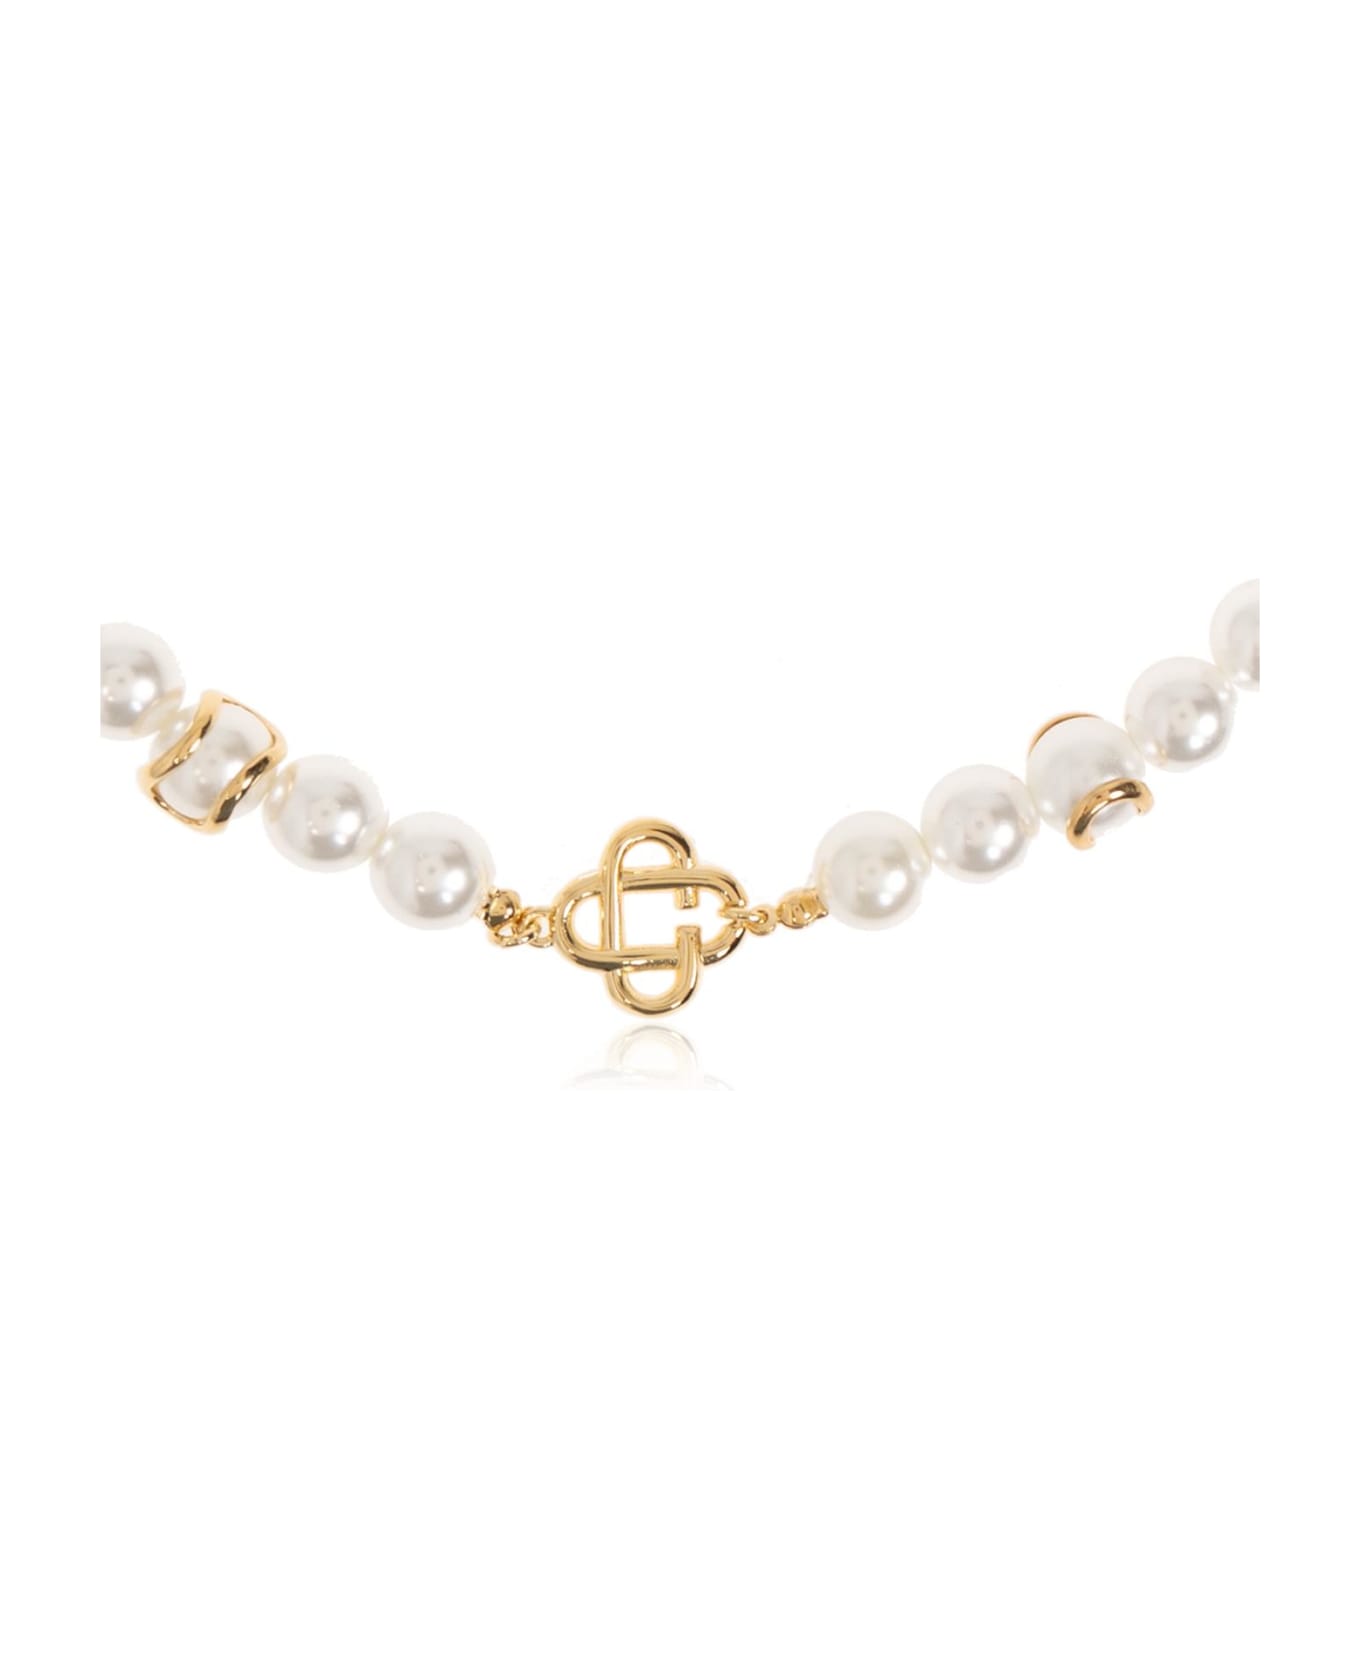 Casablanca Pearl Necklace - GOLD/WHITE